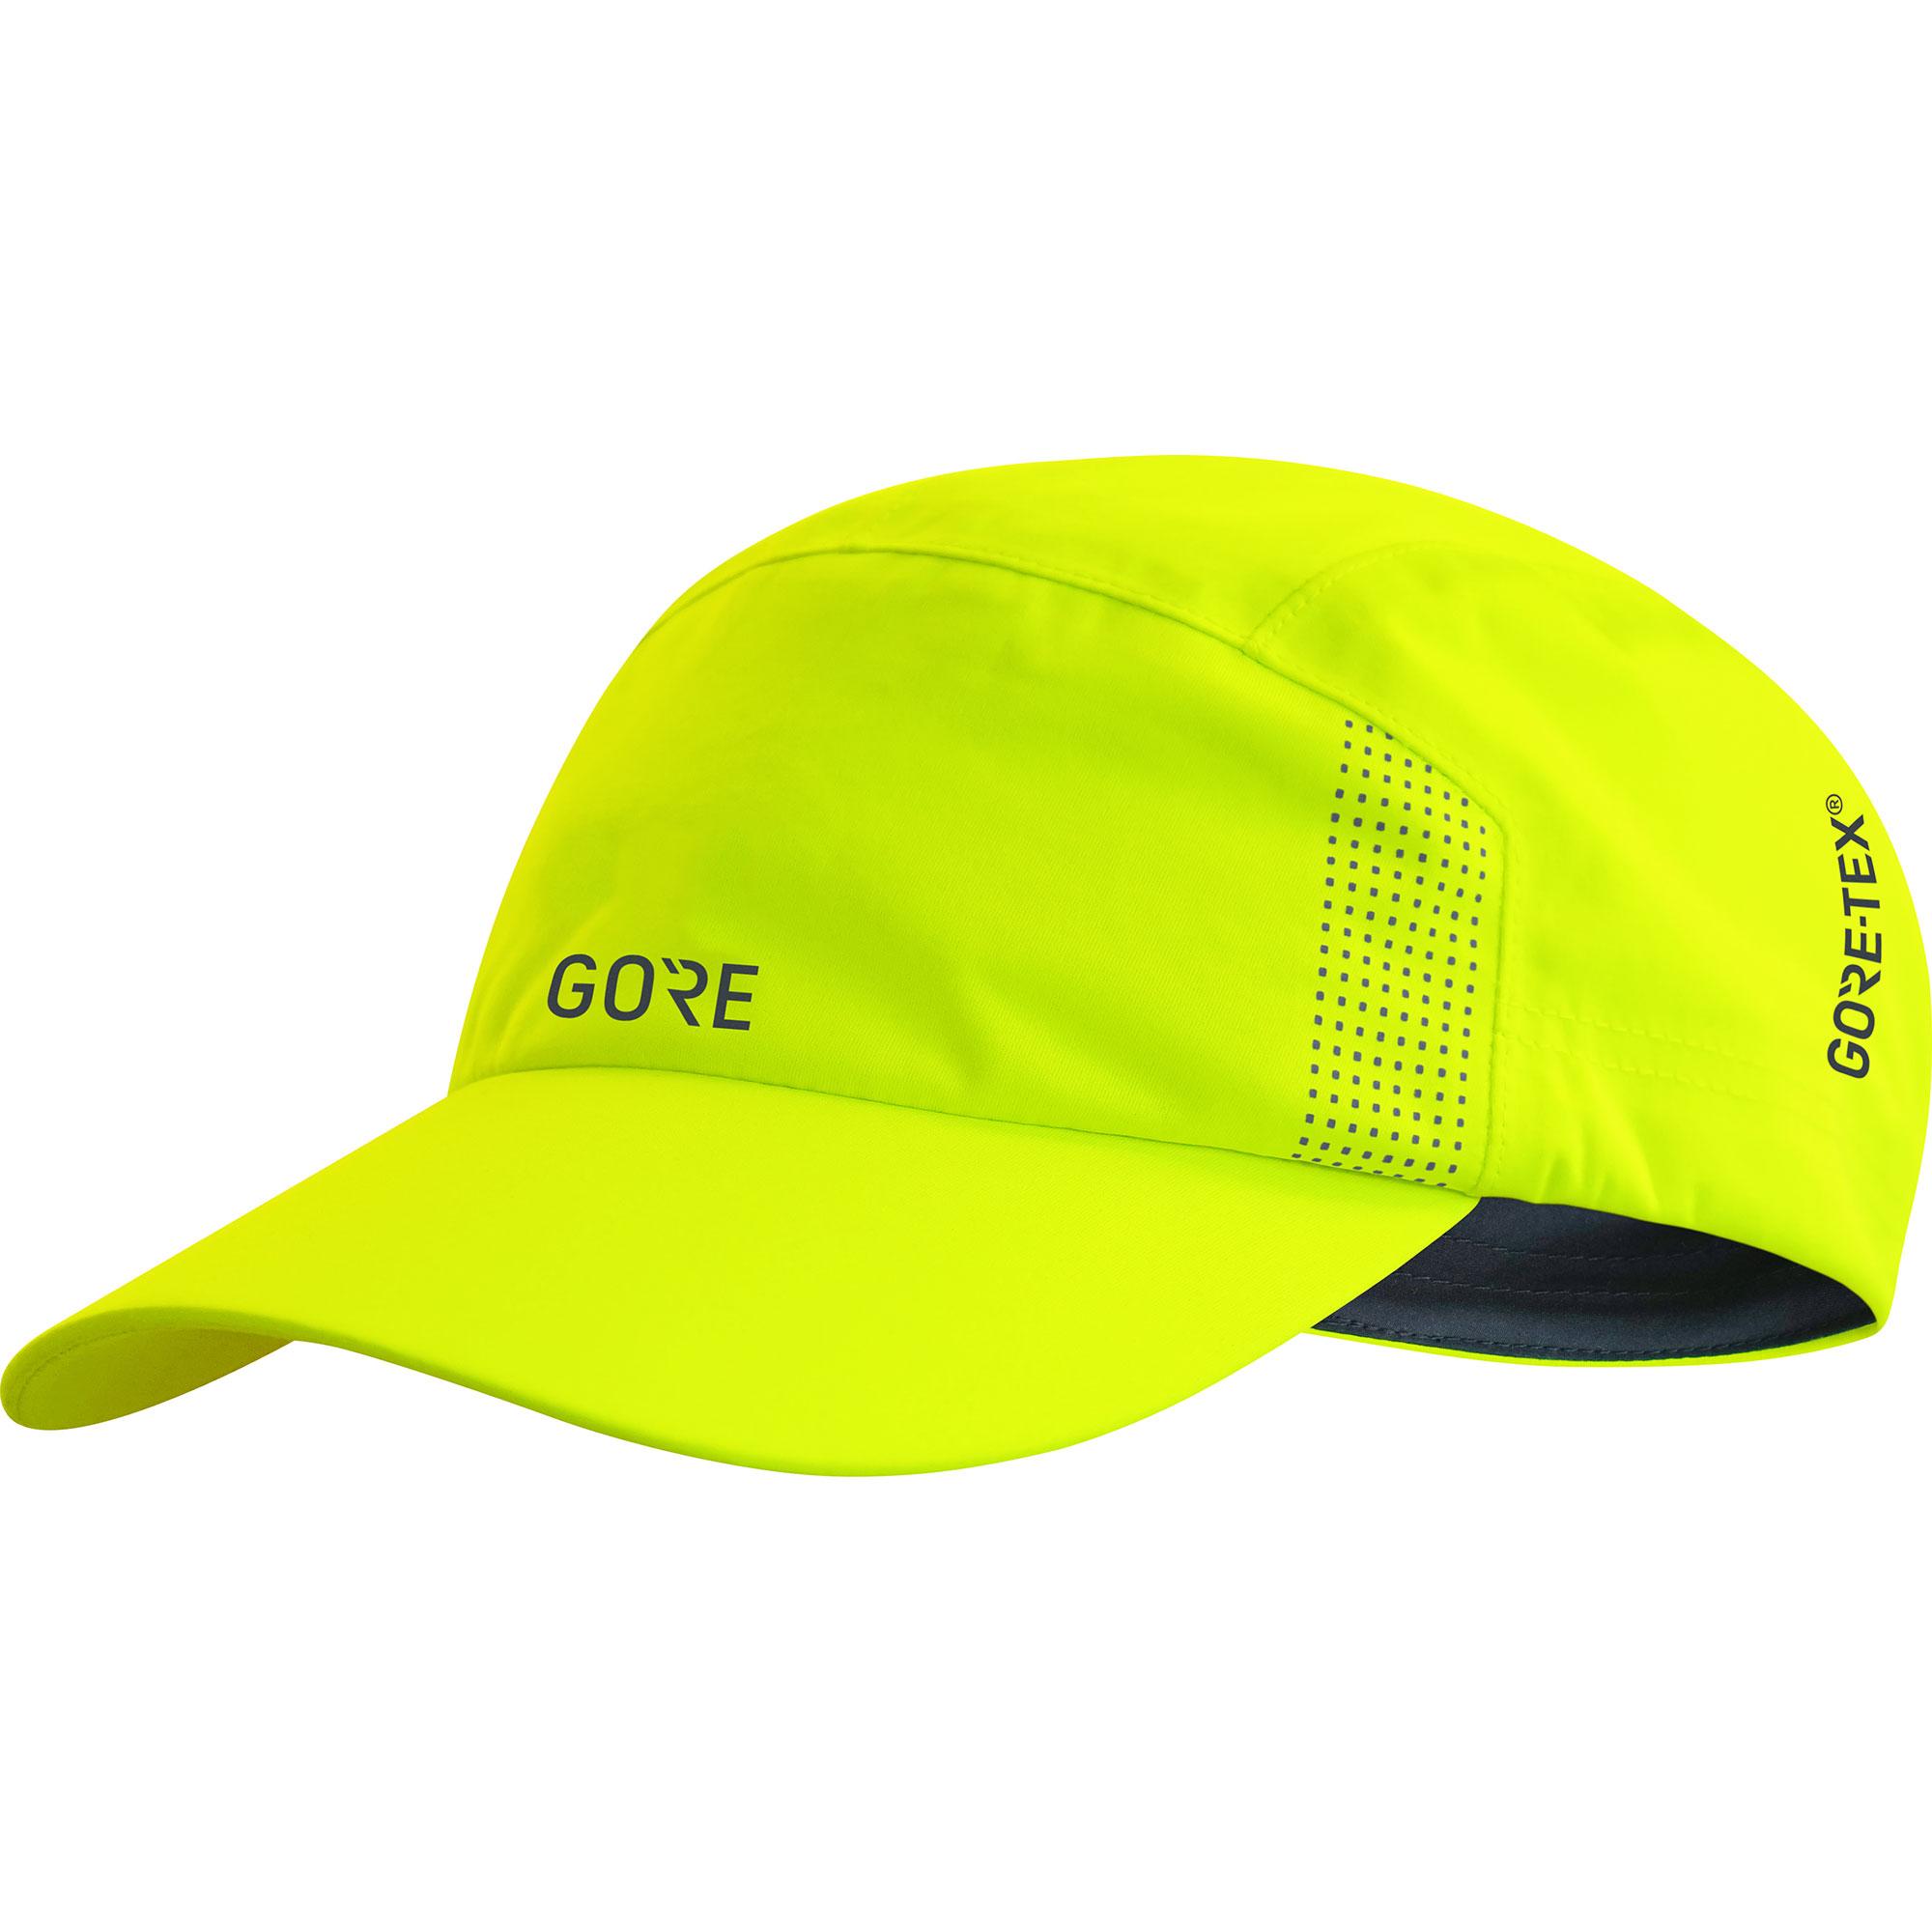 Gorewear Gore-tex Cap - Hi Vis Yellow